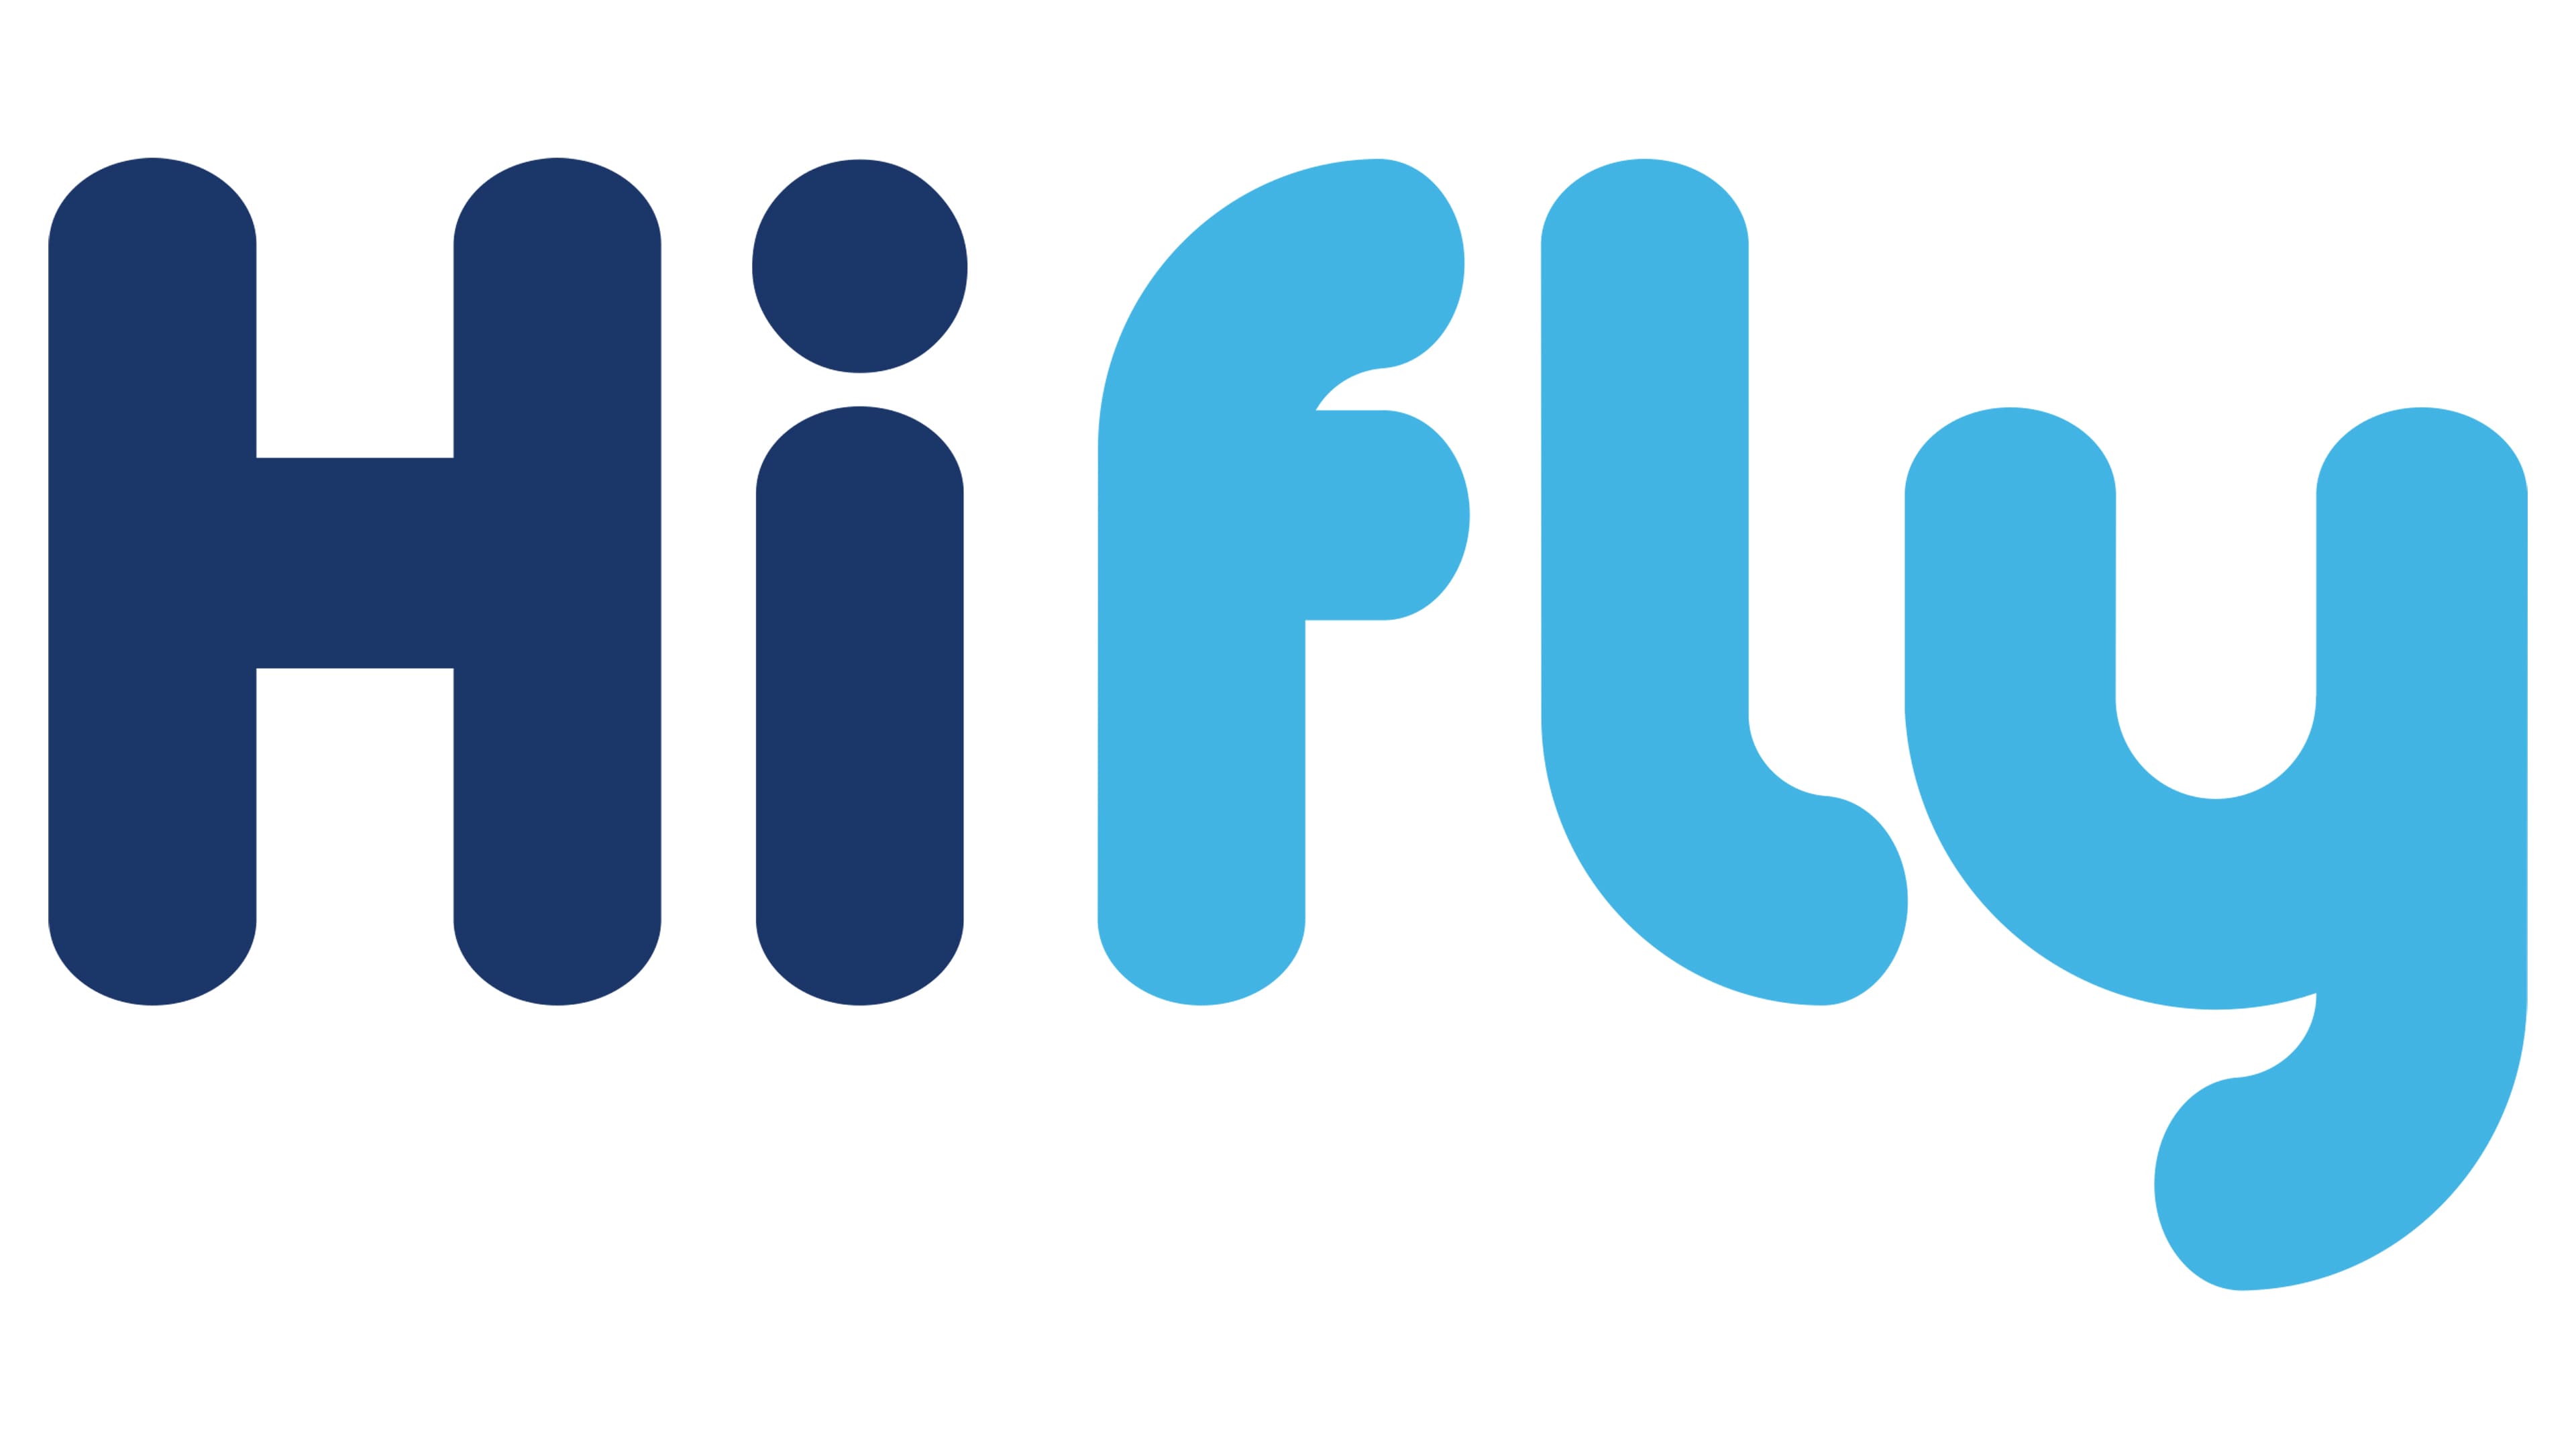 Летай логотип. Hifly logo. Hiphi эмблема. Hostfly логотип. Fly high 5